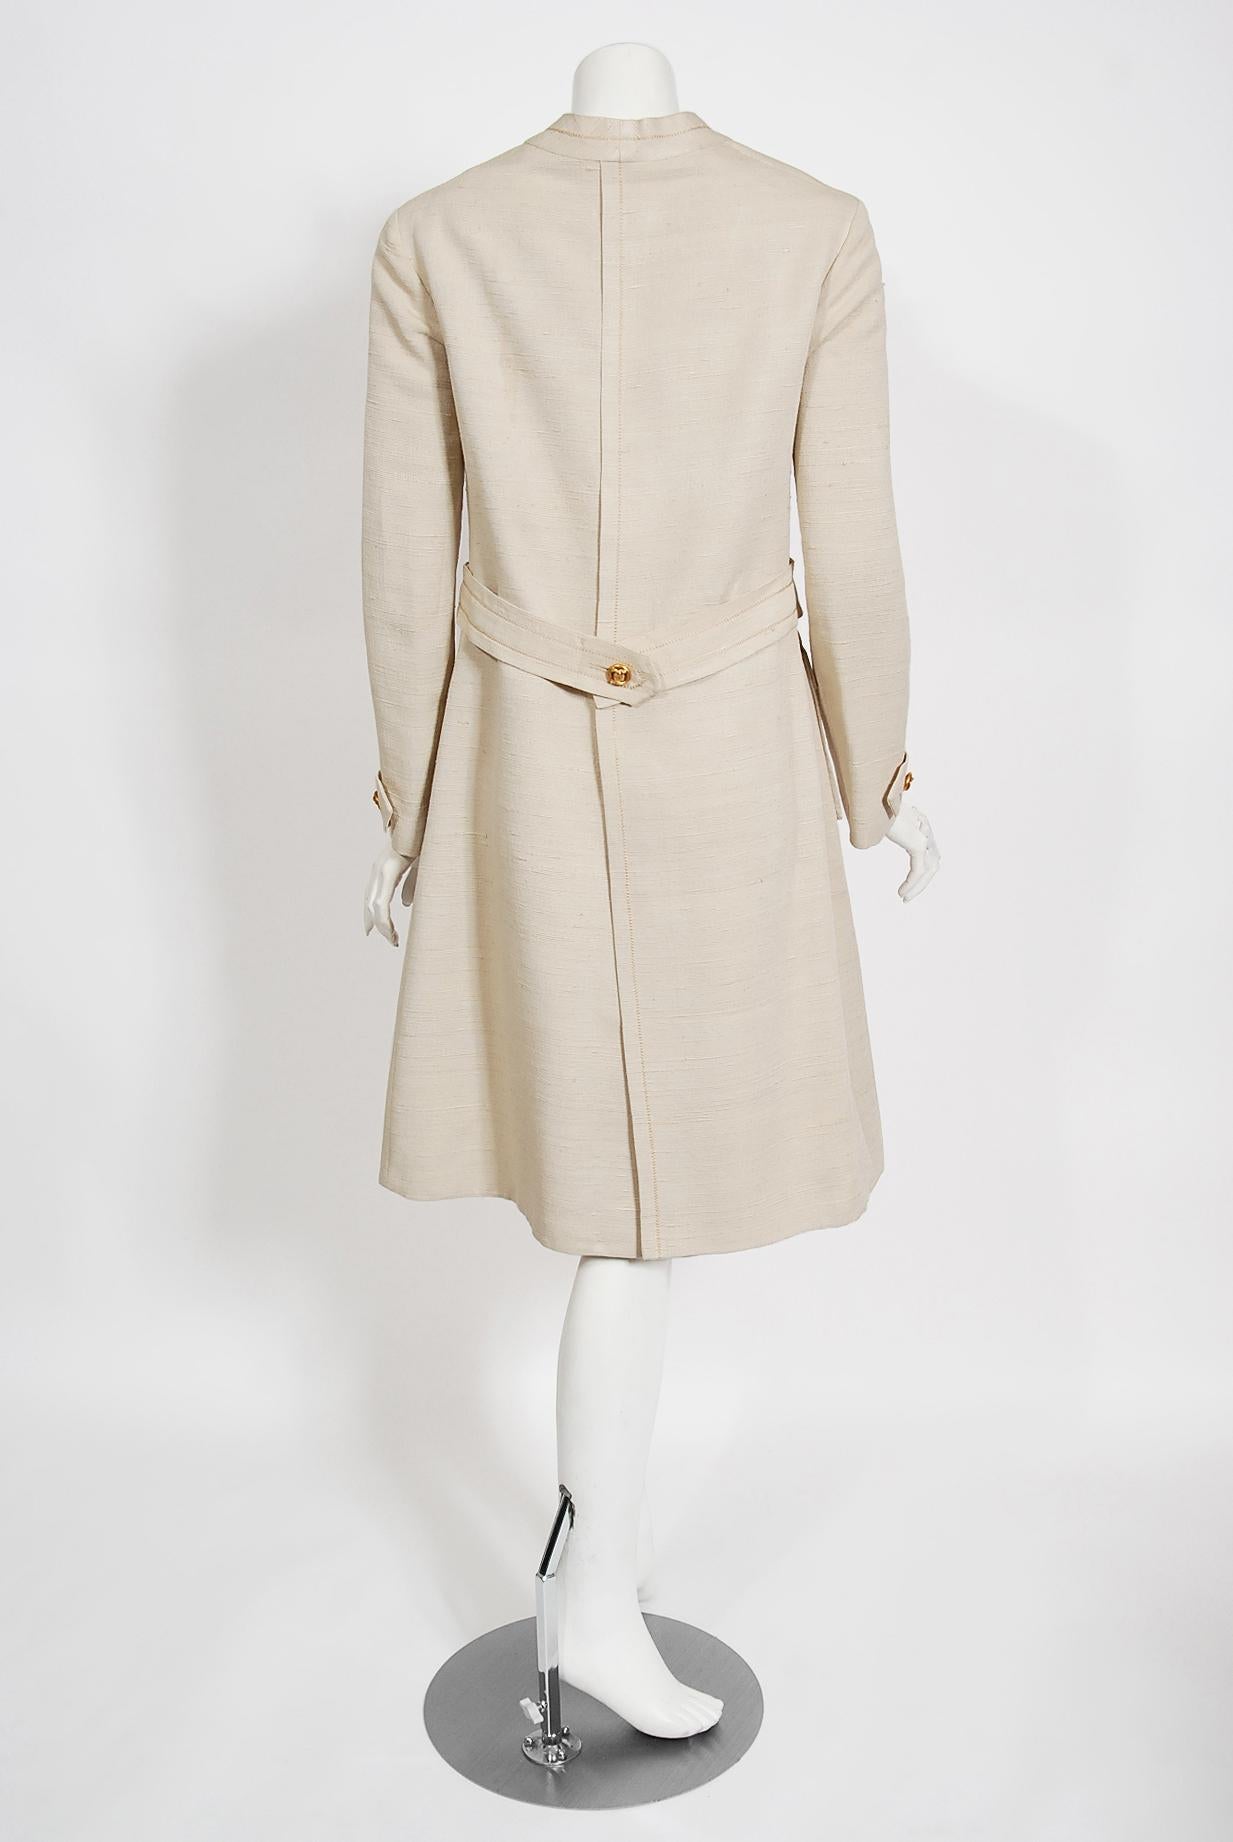 Vintage 1969 Chanel Haute Couture Documented Oatmeal Linen Jacket Skirt Suit  7